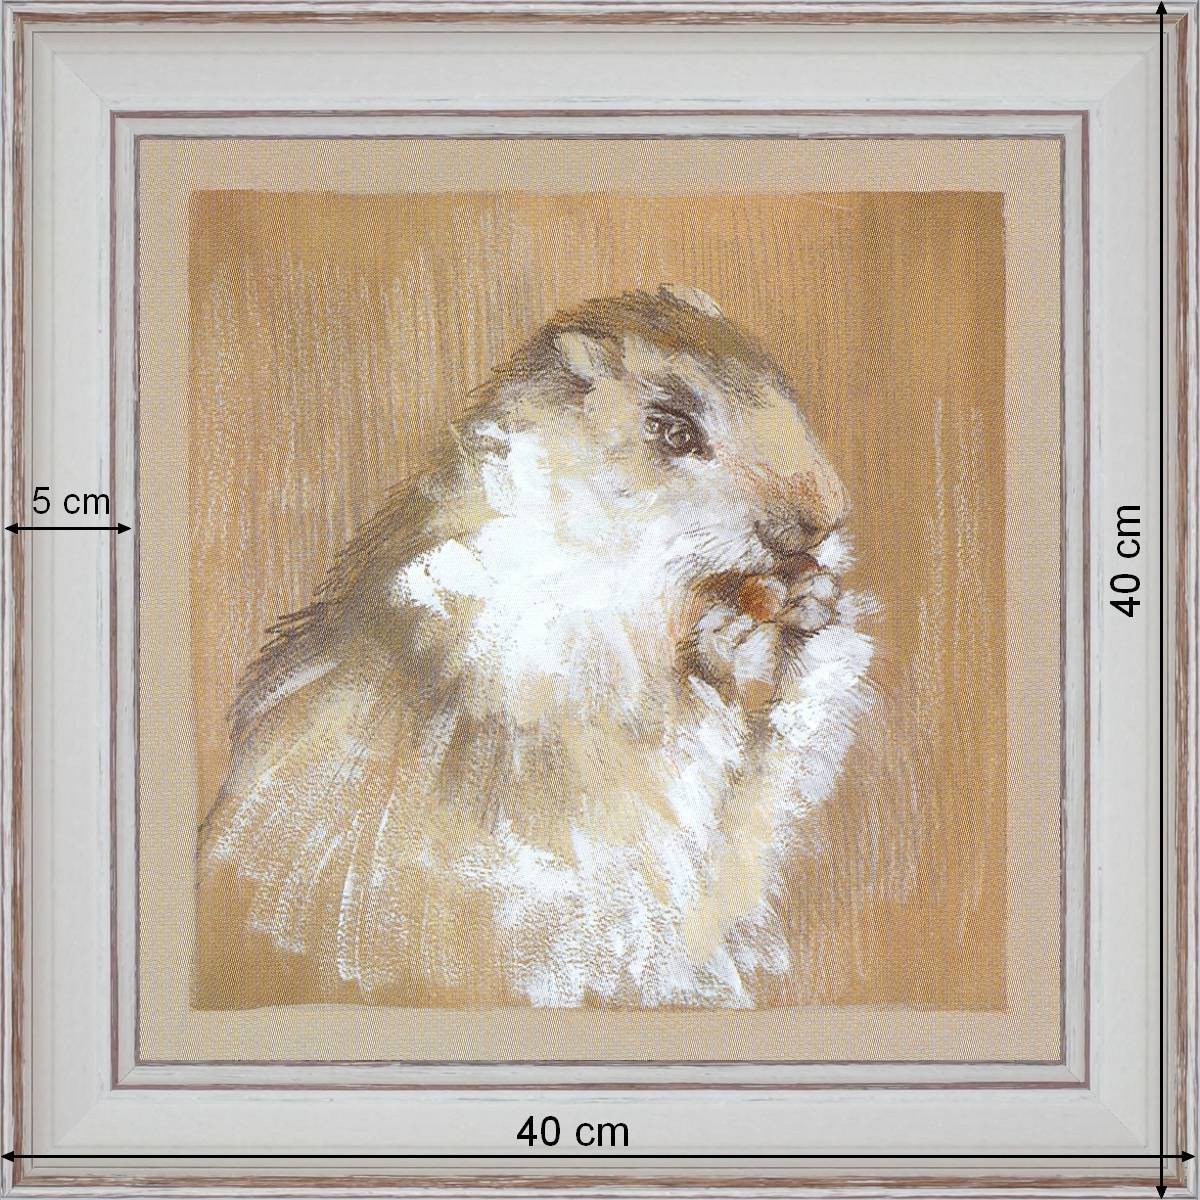 Marmot - dimensions 40 x 40 cm - White